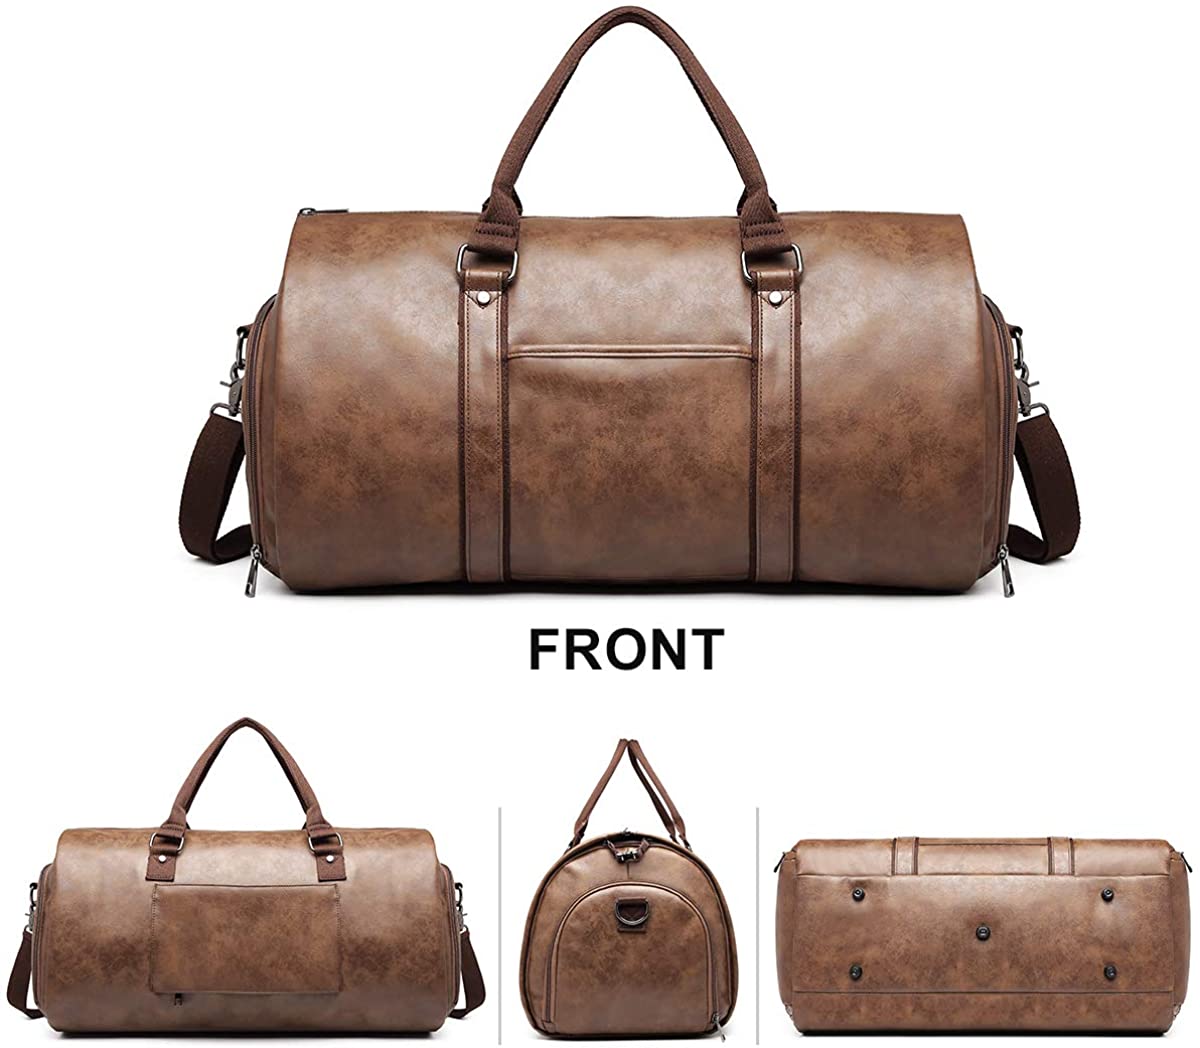 Carry on Garment Bag for Travel, Bukere Convertible Travel Duffel Suit with  Shoe Compartment, Detachable Shoulder Strap, 2 in 1 Weekender Men Women